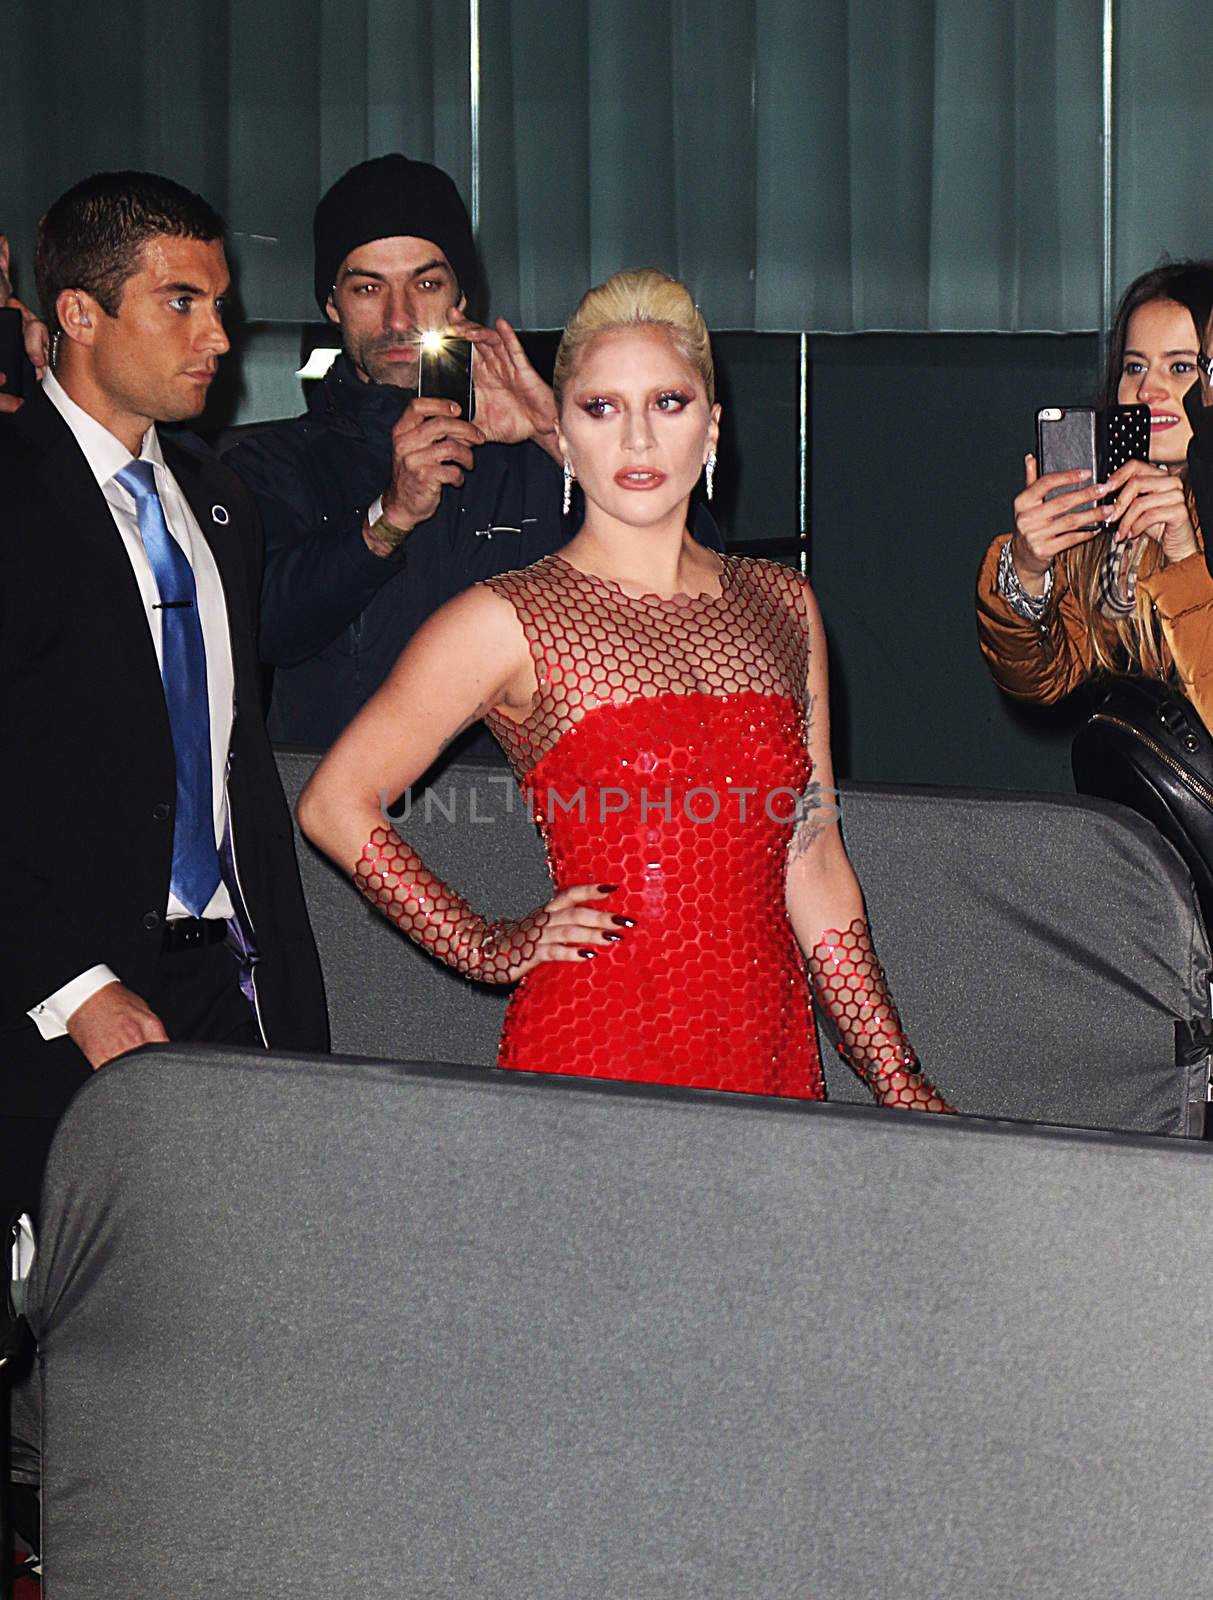 UK, London: Lady Gaga arrives at the British Fashion Awards at the London Coliseum in London, UK on November 23, 2015.